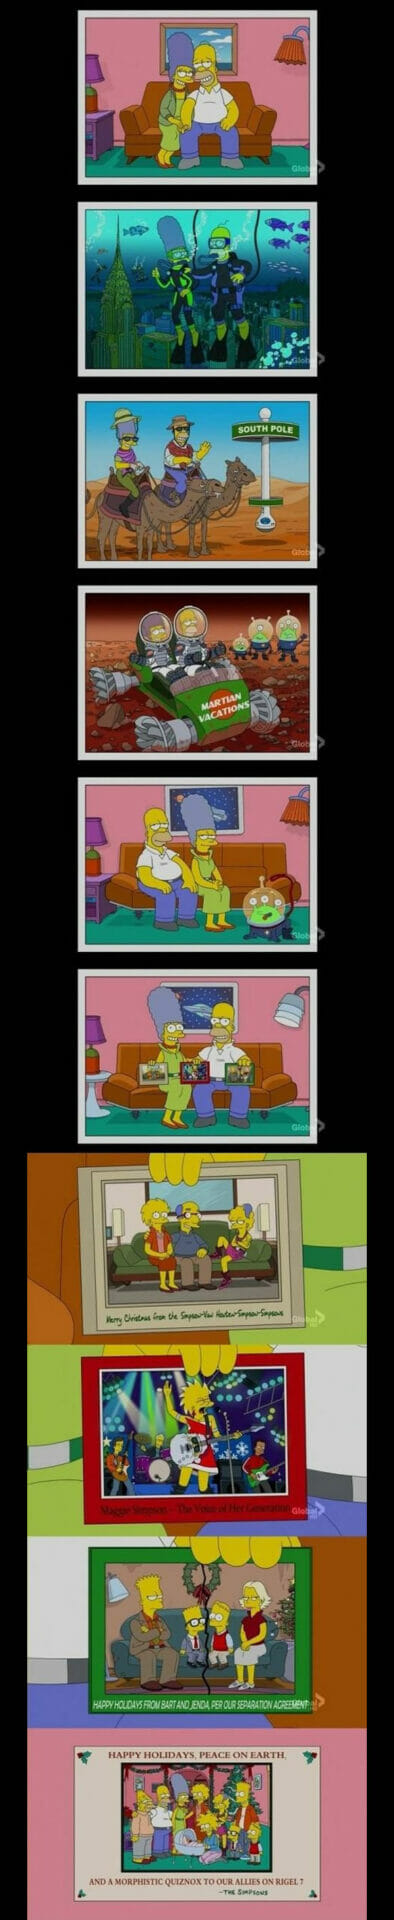 Os Simpsons cresceram!